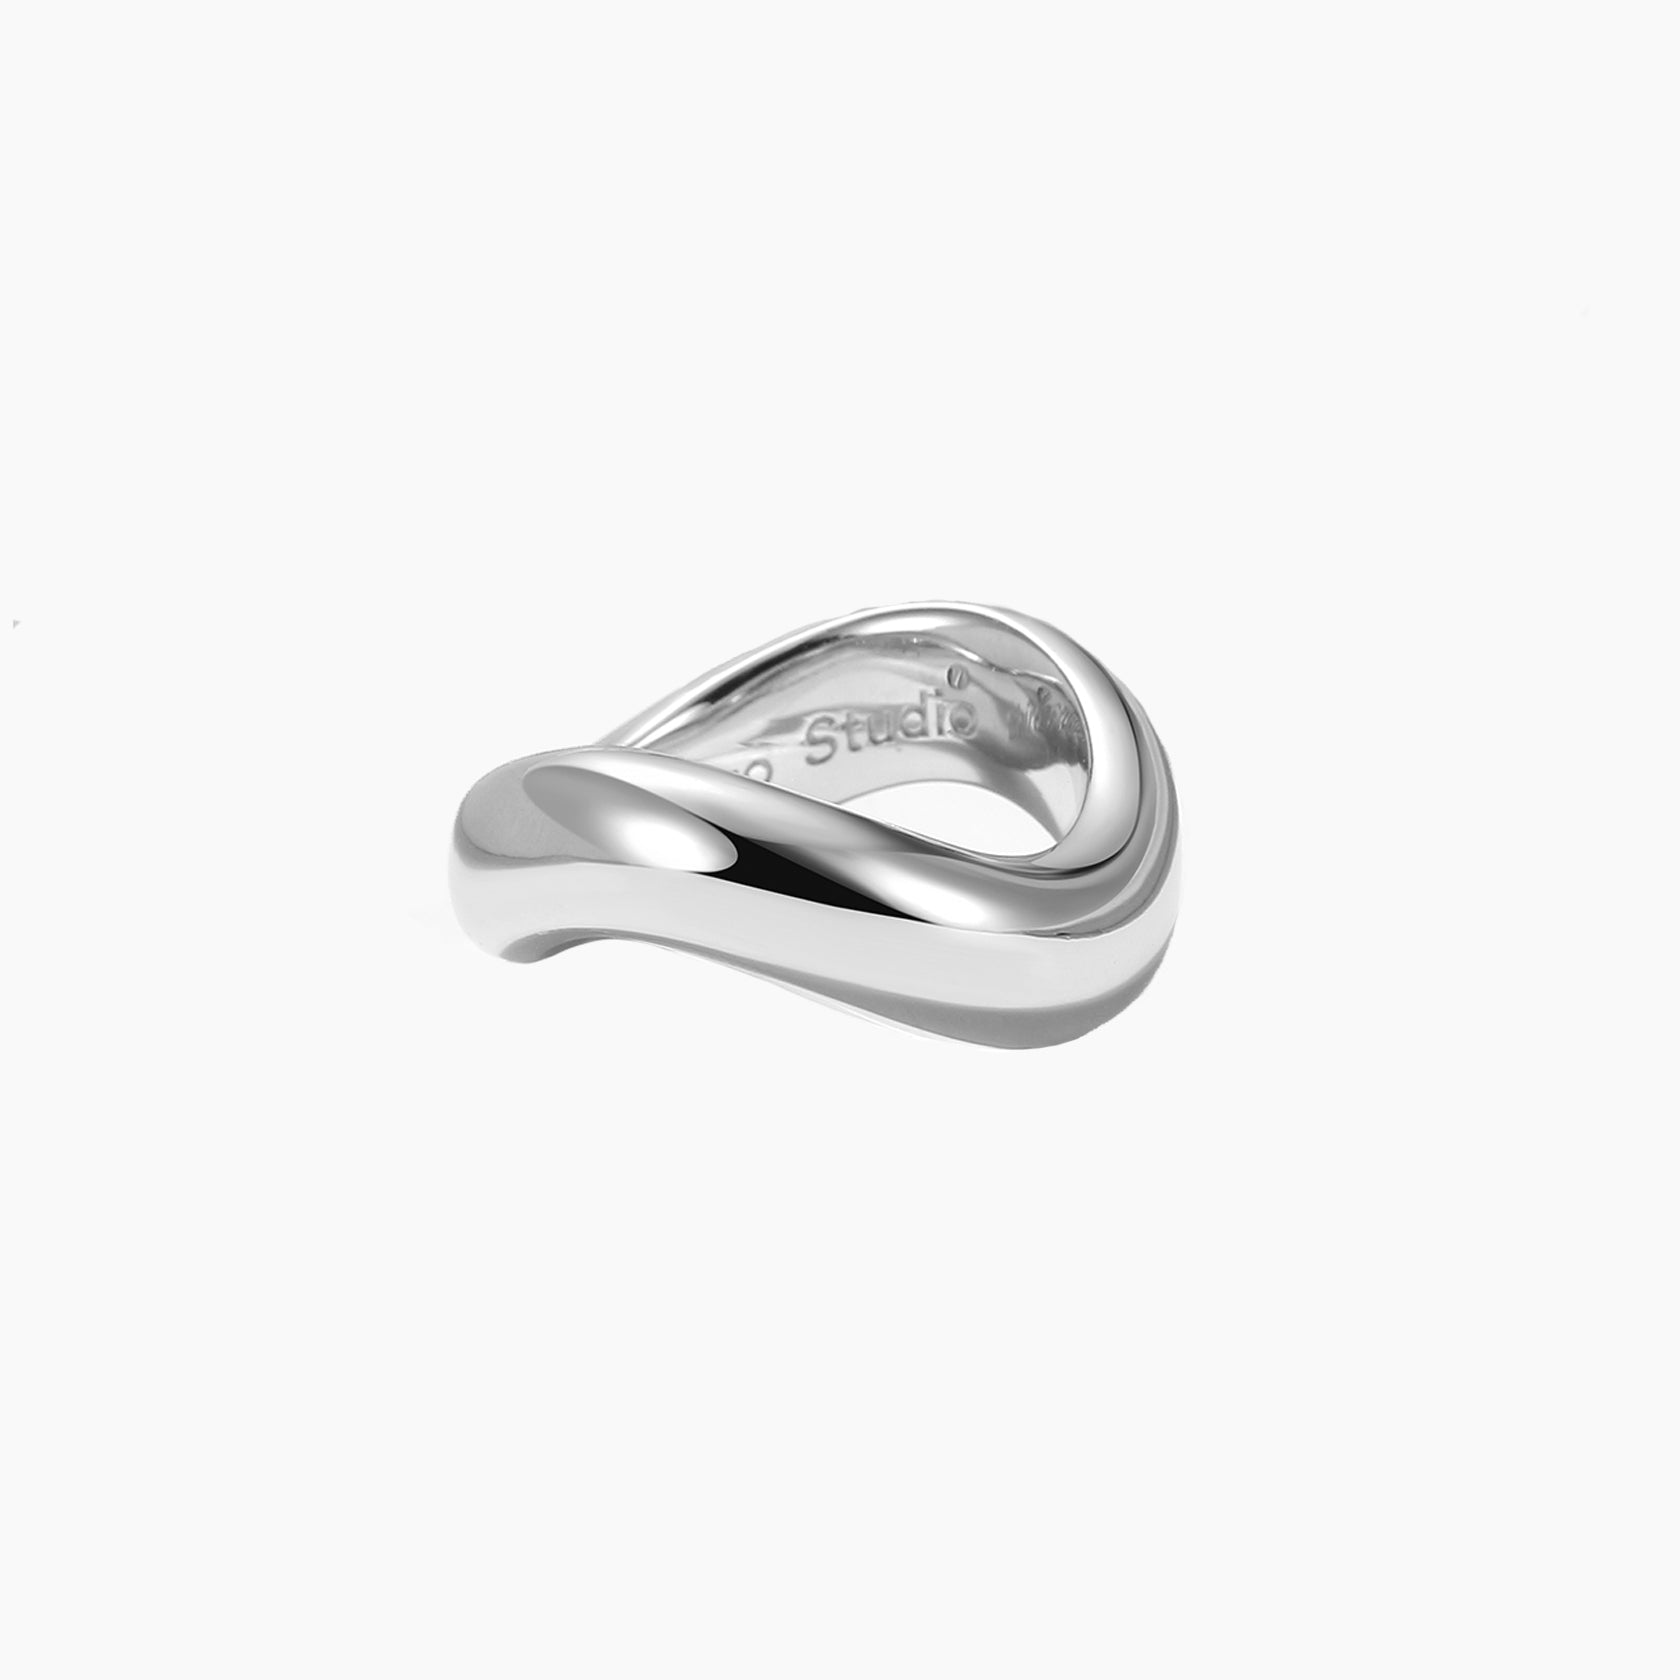 Pearl Clip Bracelet - Sterling Silver/Freshwater Pearl